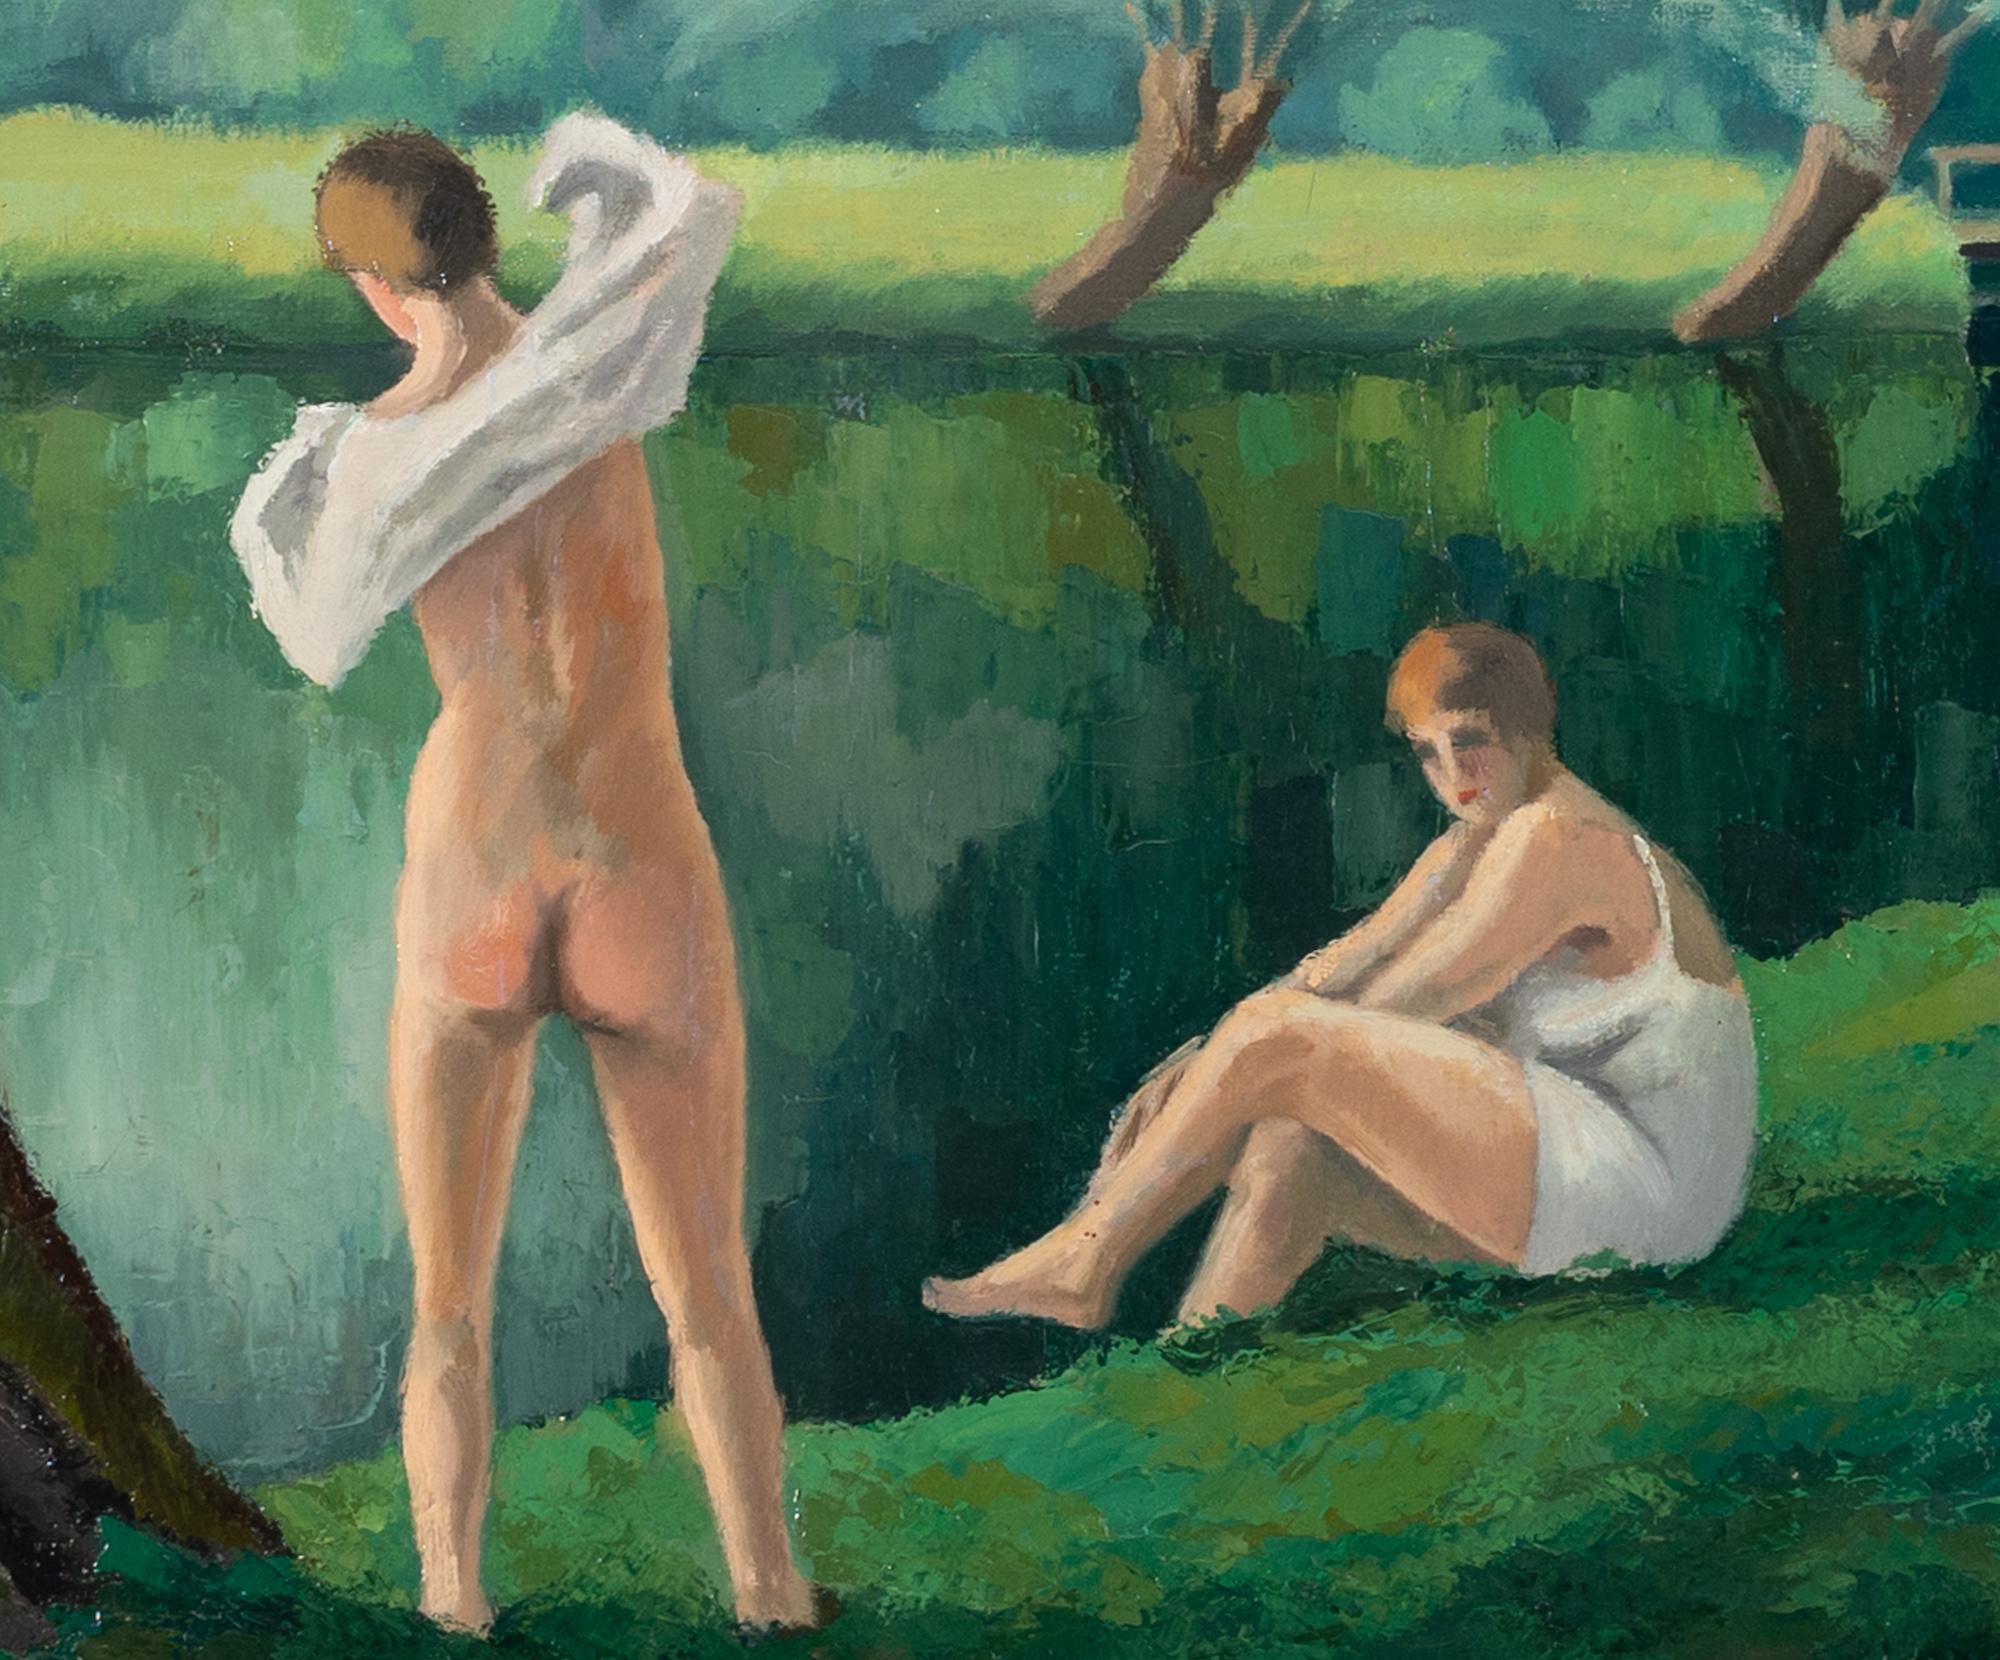 Les Baigneuses by Paulémile Pissarro - Nude scene, riverscene painting - Black Figurative Painting by Paul Emile Pissarro